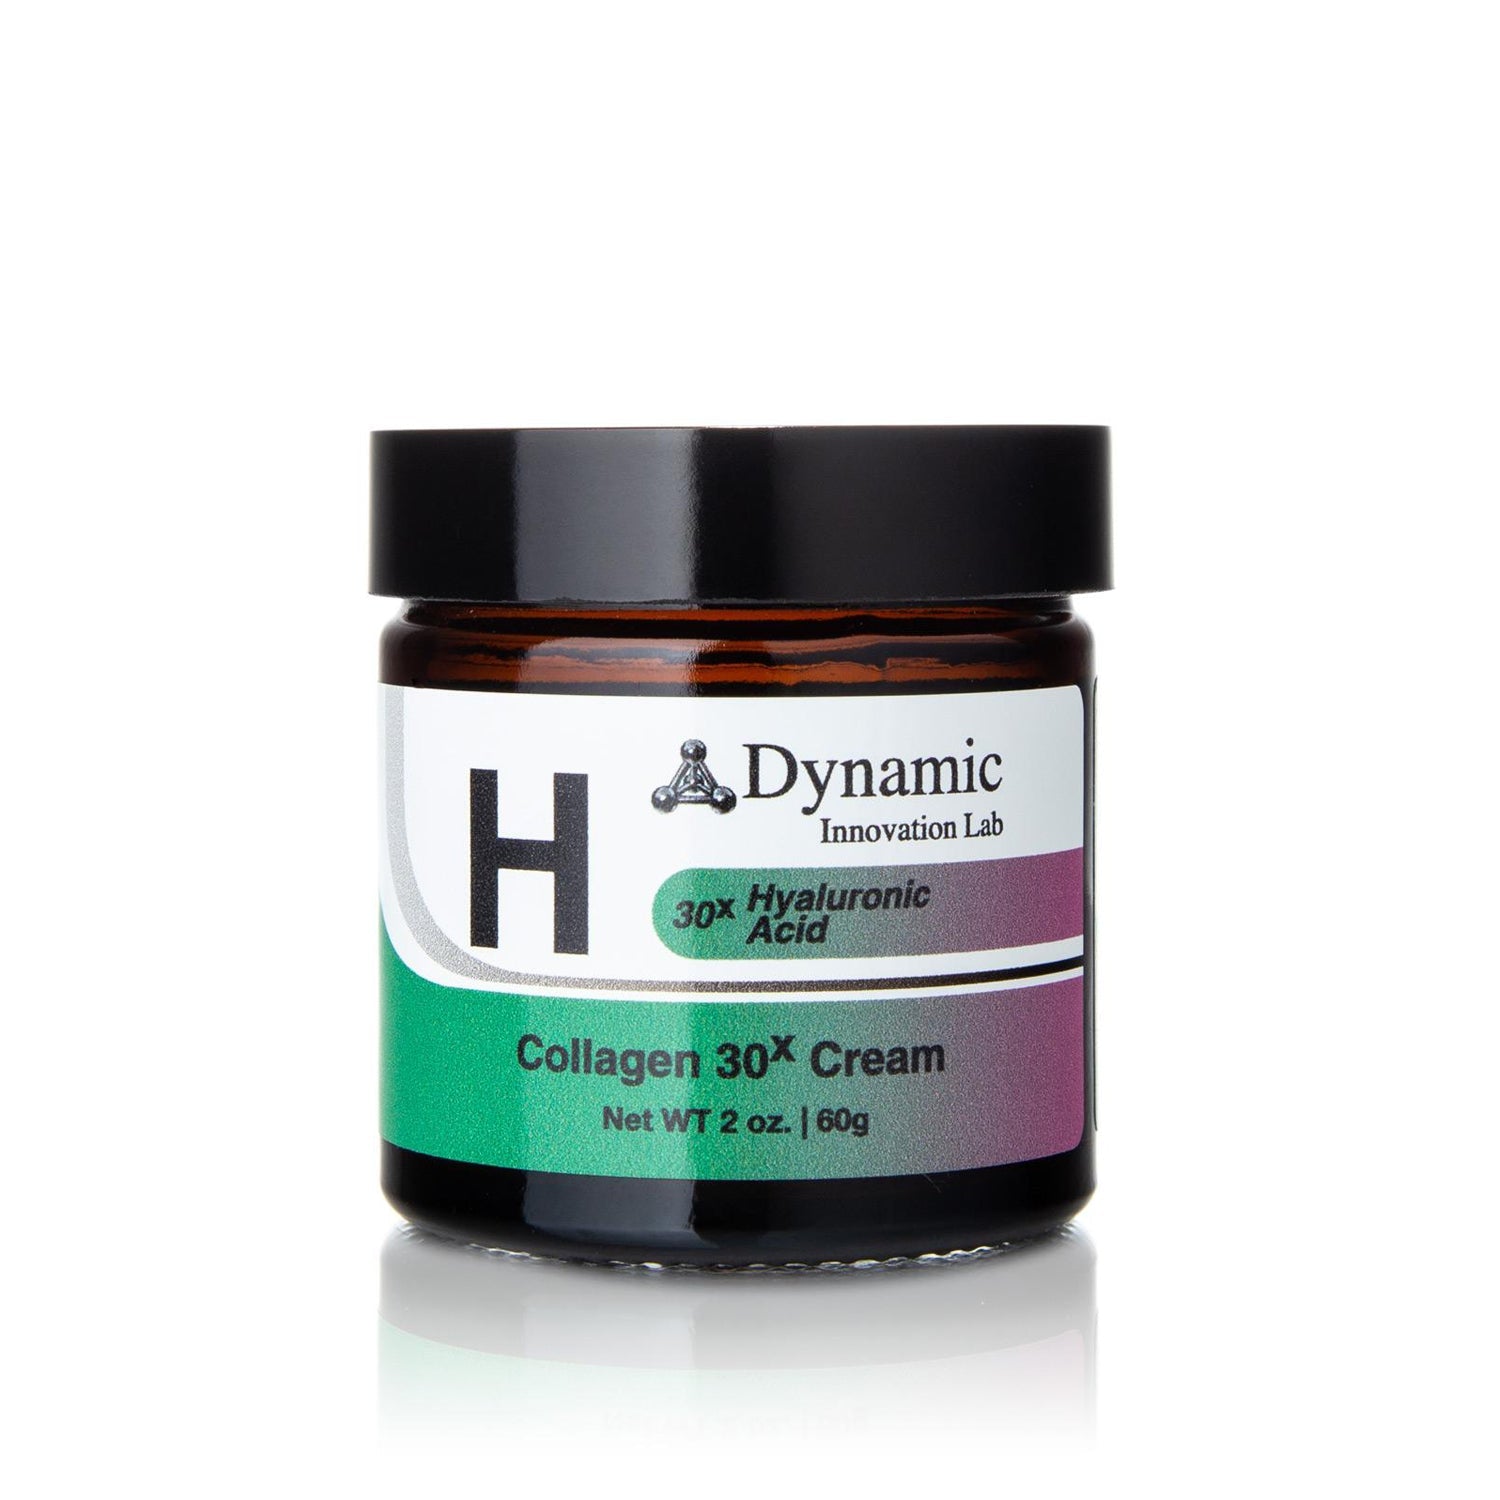 Collagen 30x Cream - Hyaluronic Acid